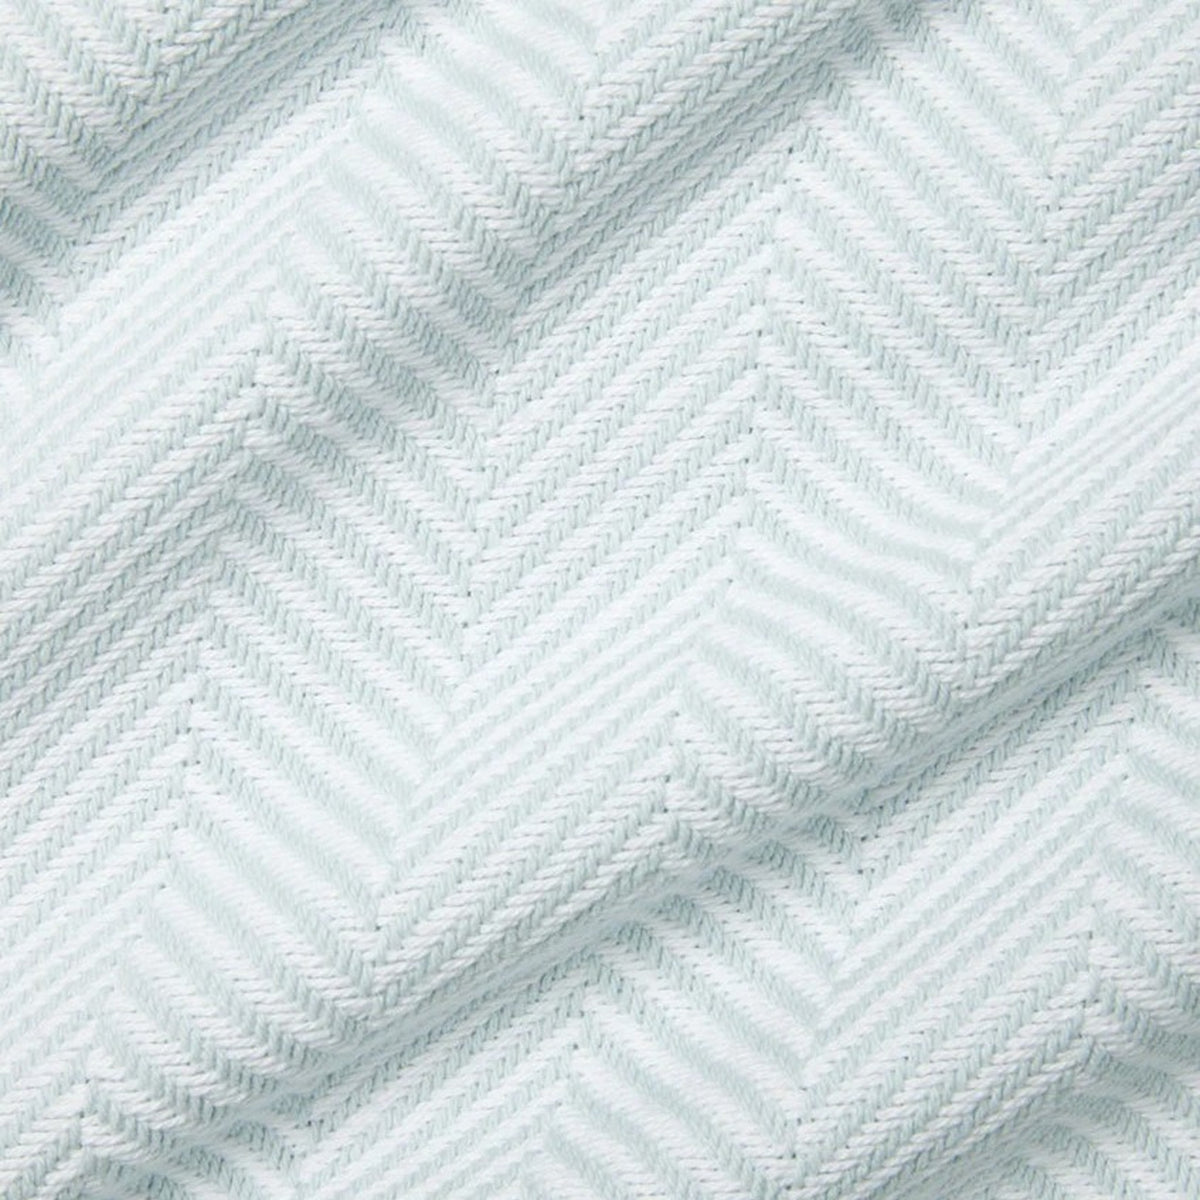 Swatch Sample of Sferra Camilo Blanket in White/Aqua